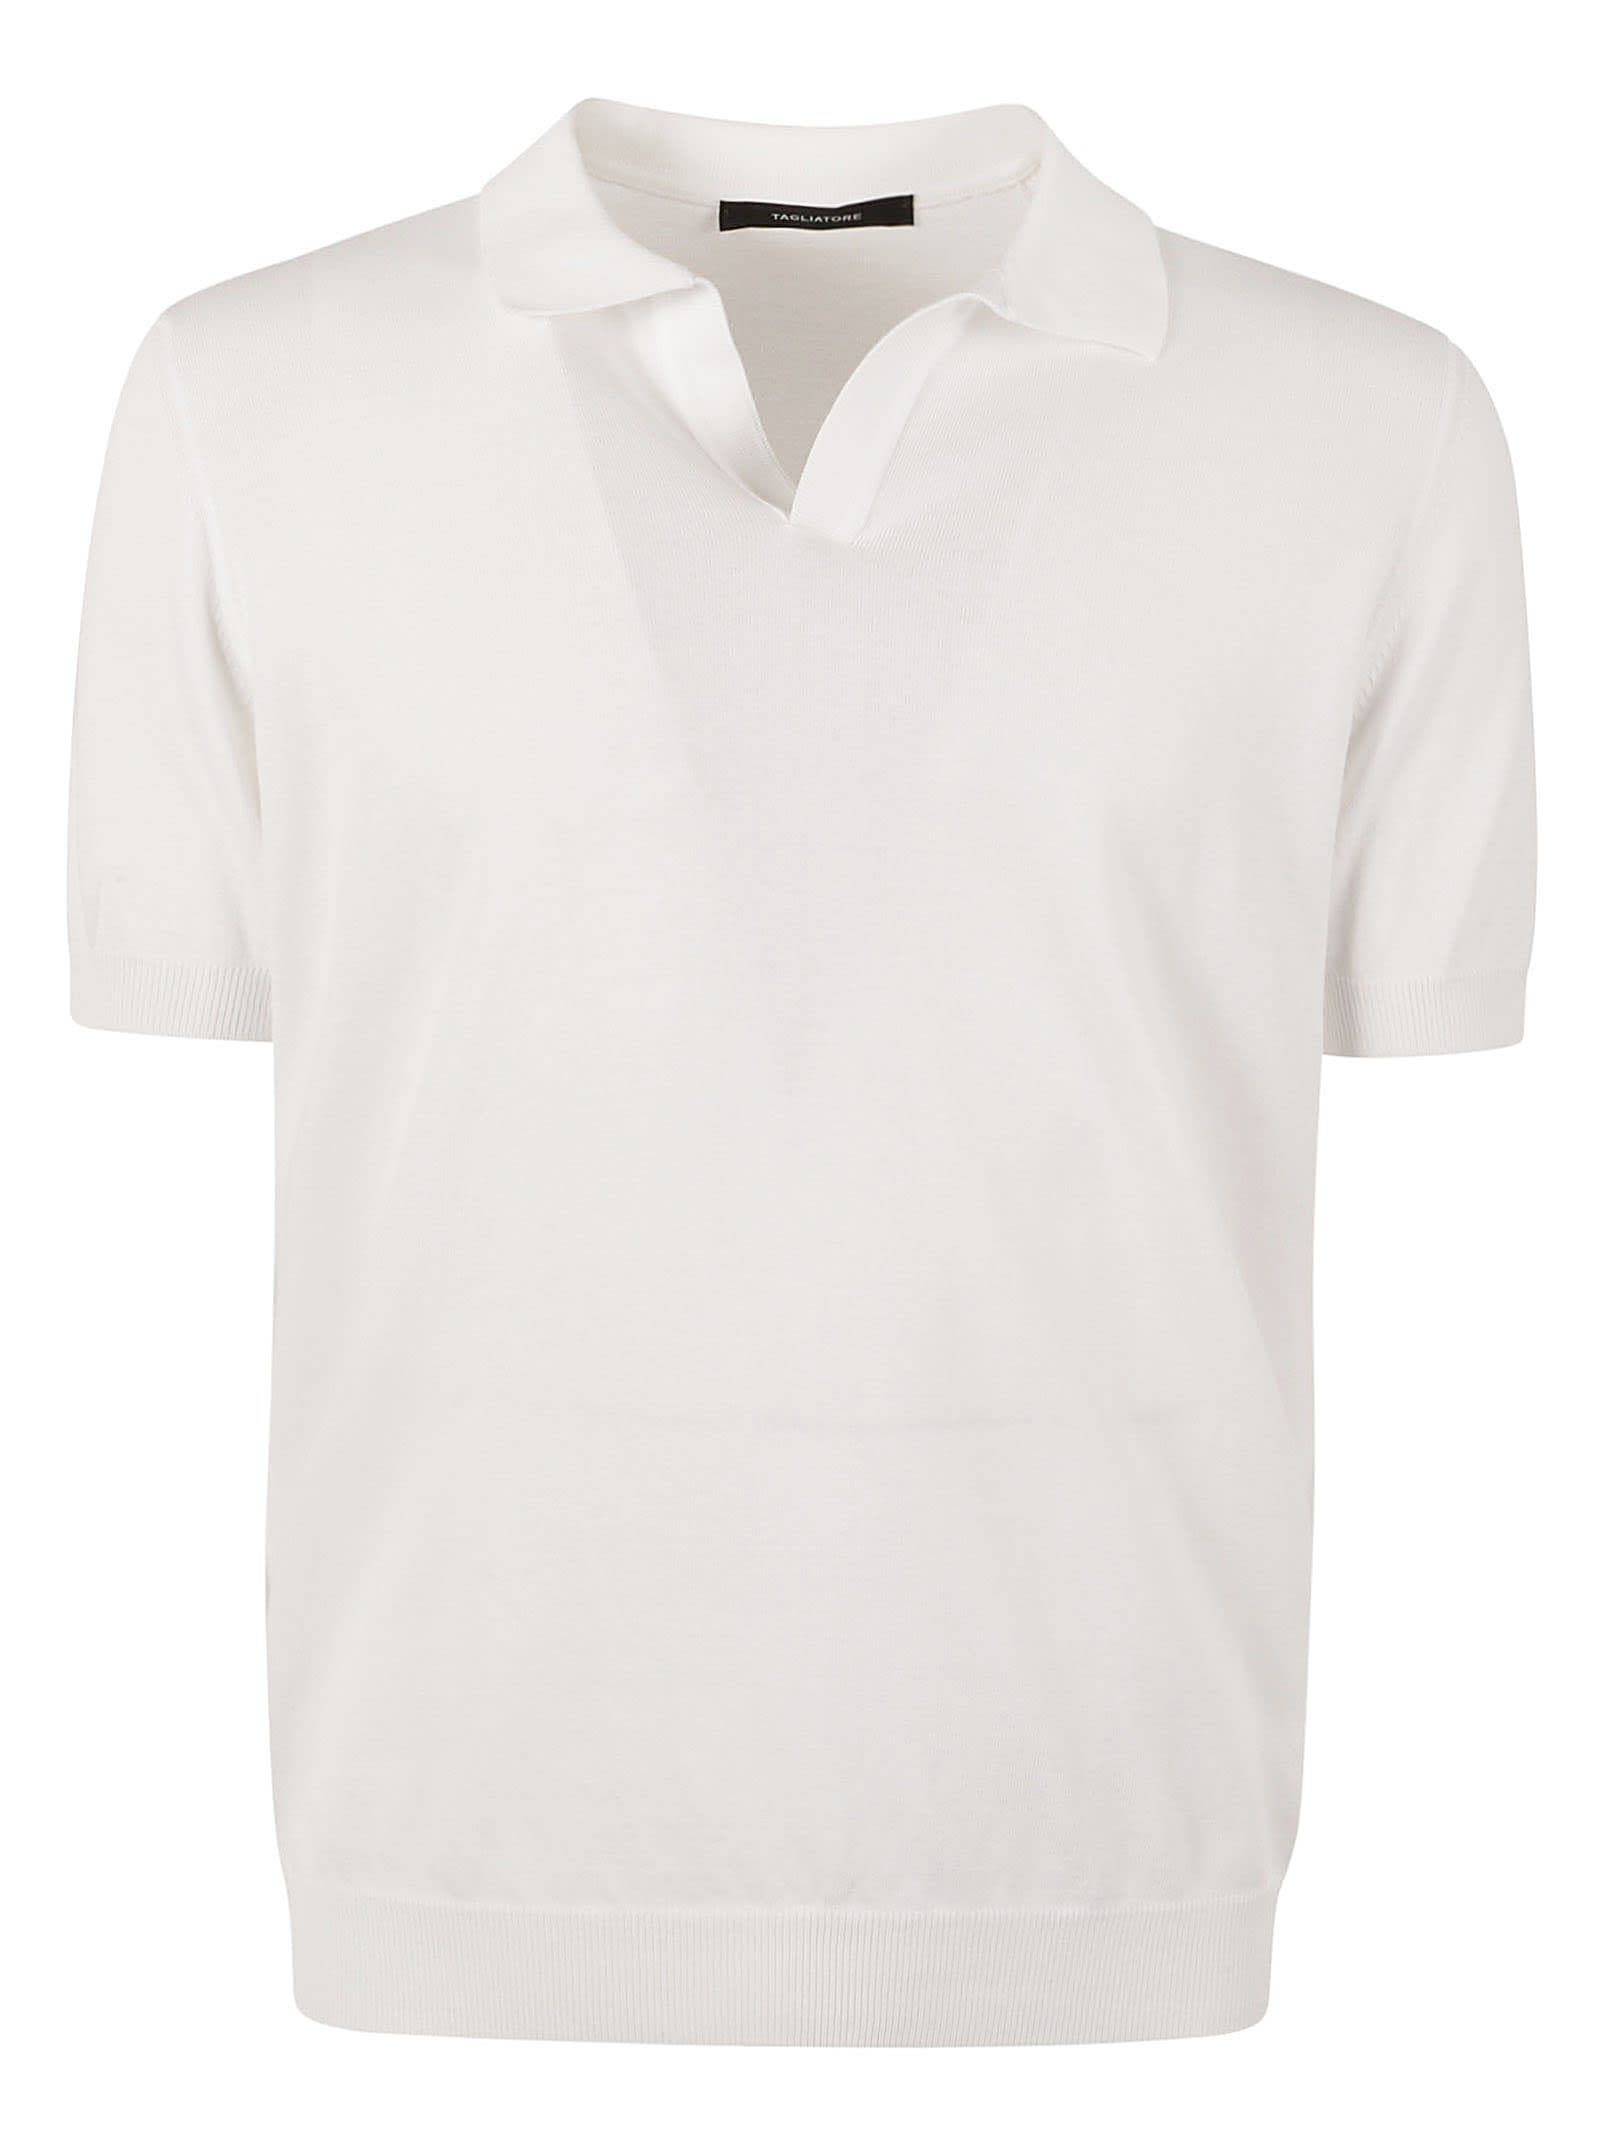 Button-less Placket Polo Shirt